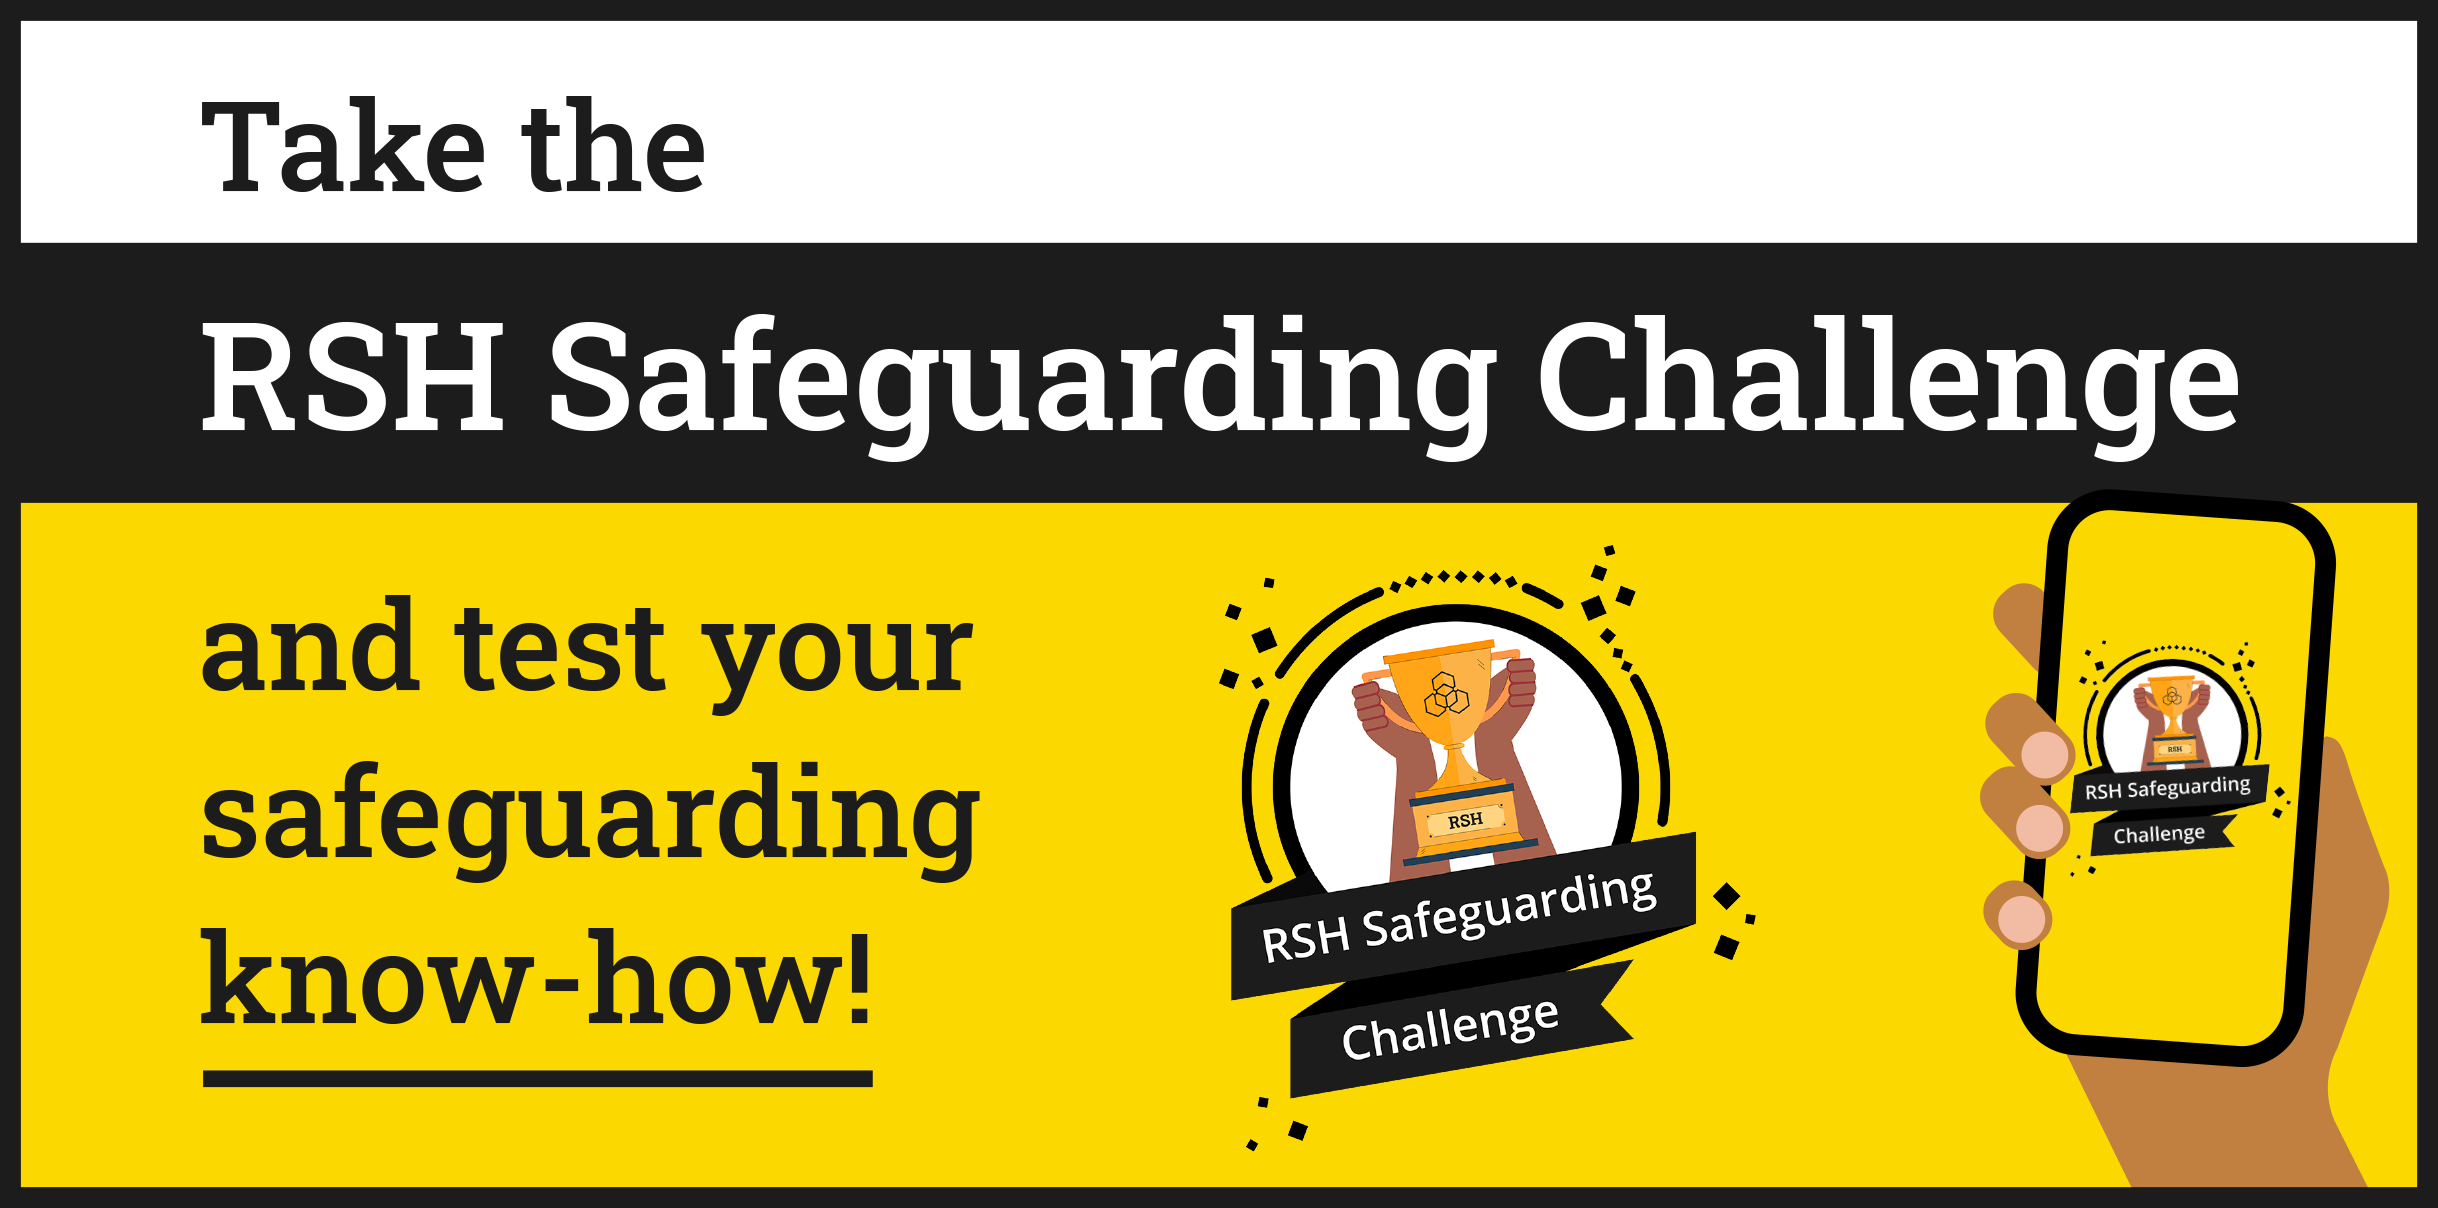 take the RSH safeguarding challenge